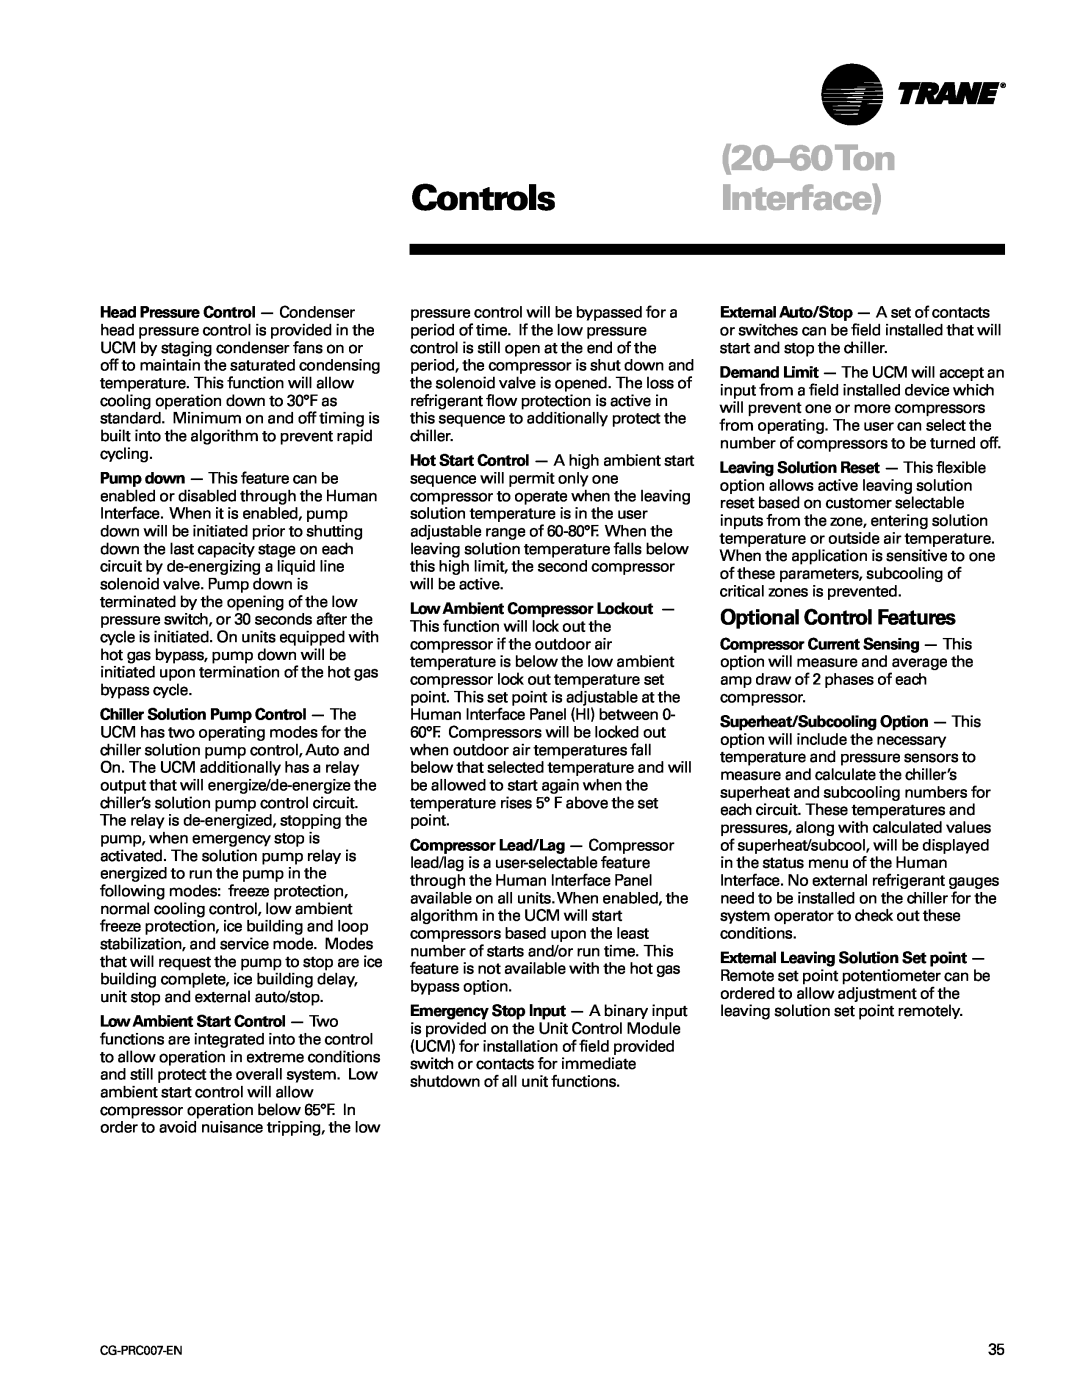 Trane CG-PRC007-EN manual 20-60Ton Controls Interface, Optional Control Features 